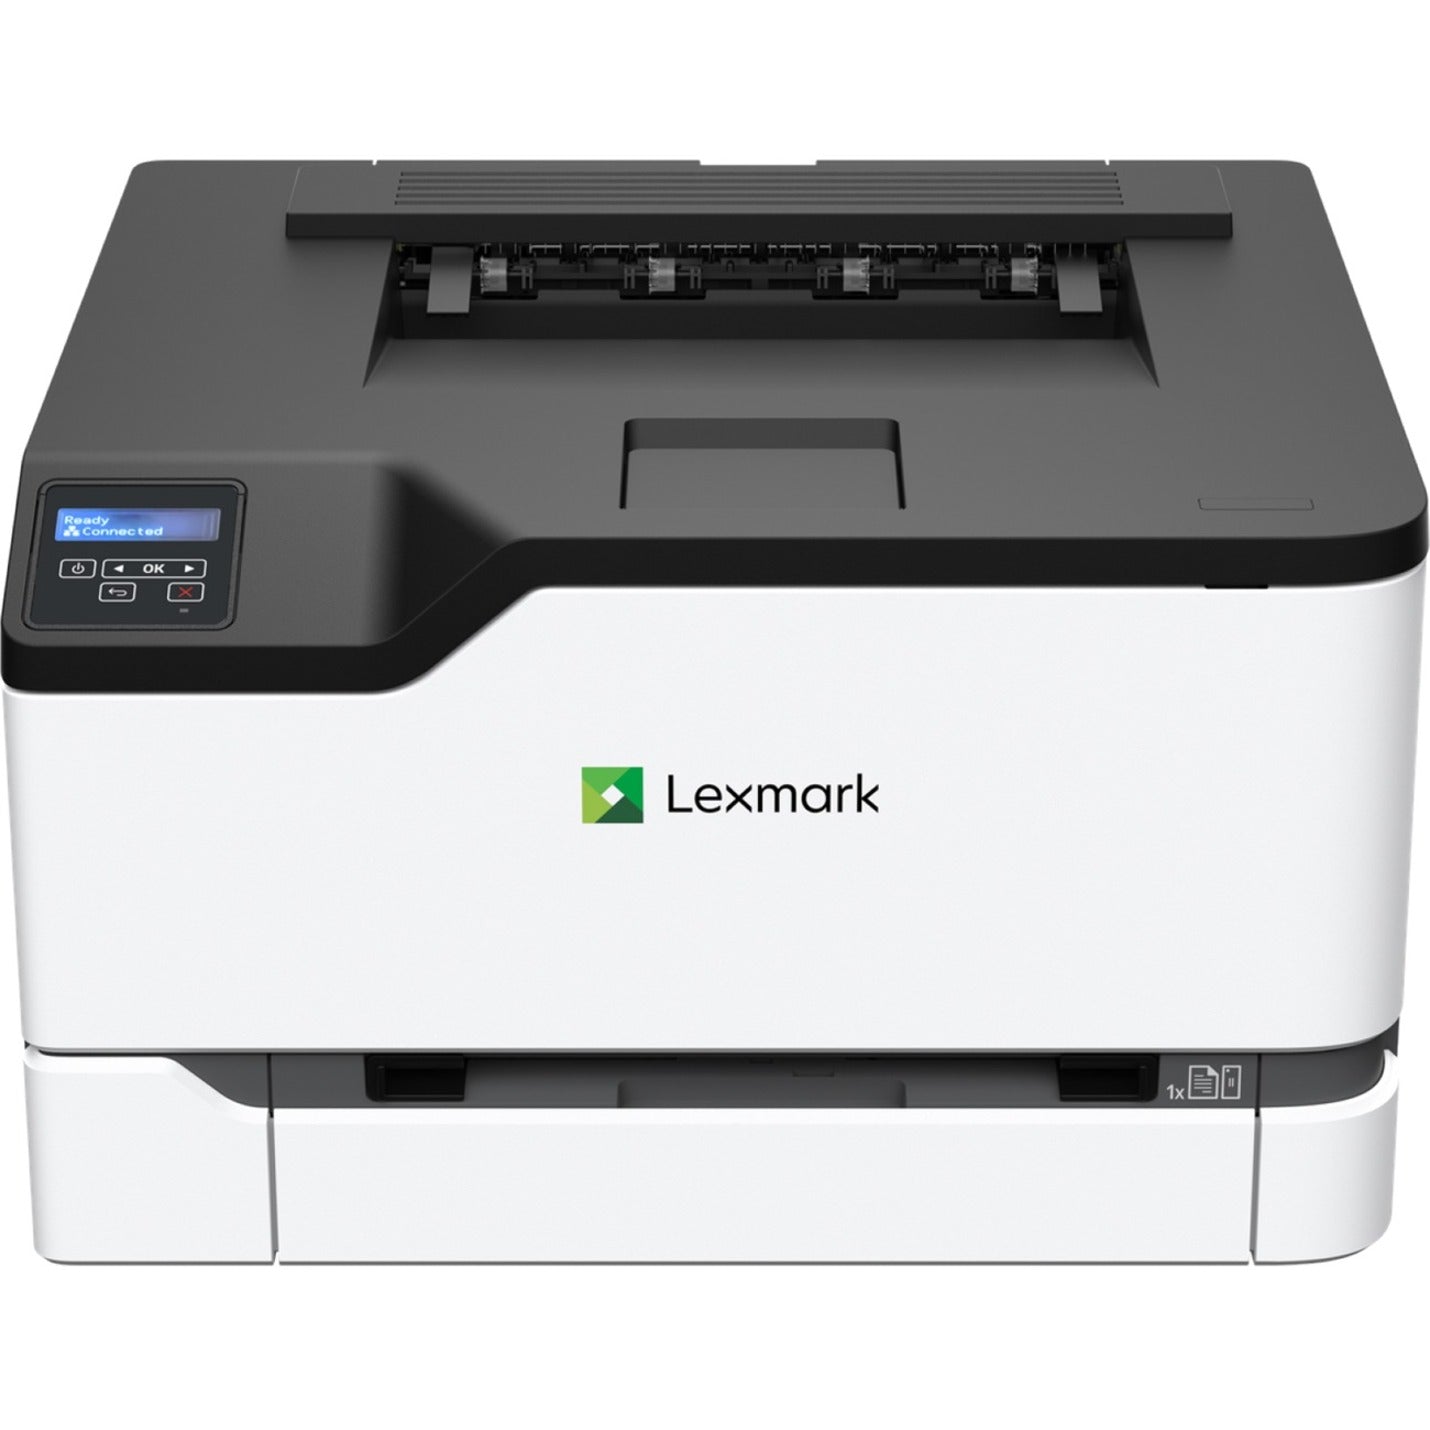 Lexmark 40N9020 CS331dw Laser Printer, Color, Automatic Duplex Printing, Wireless LAN, Ethernet